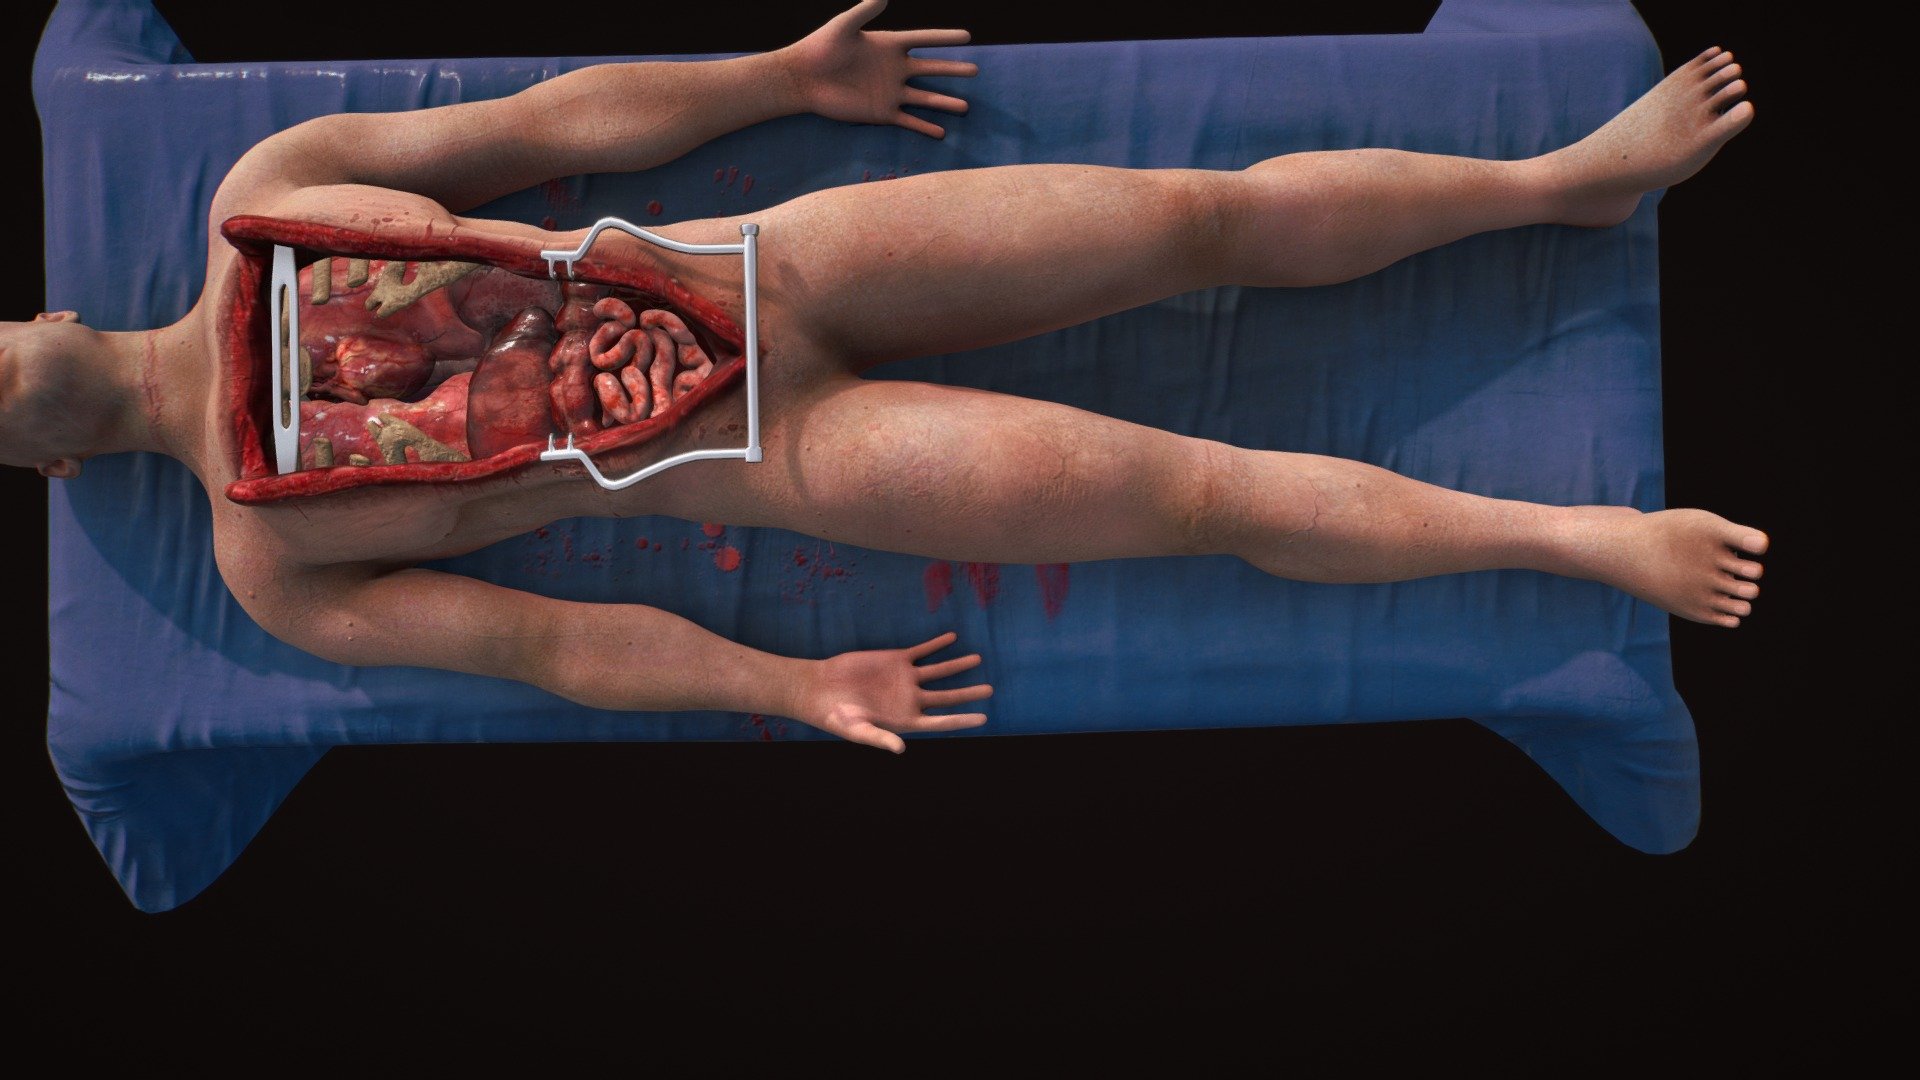 An Autopsy - 3D model by artmellows.